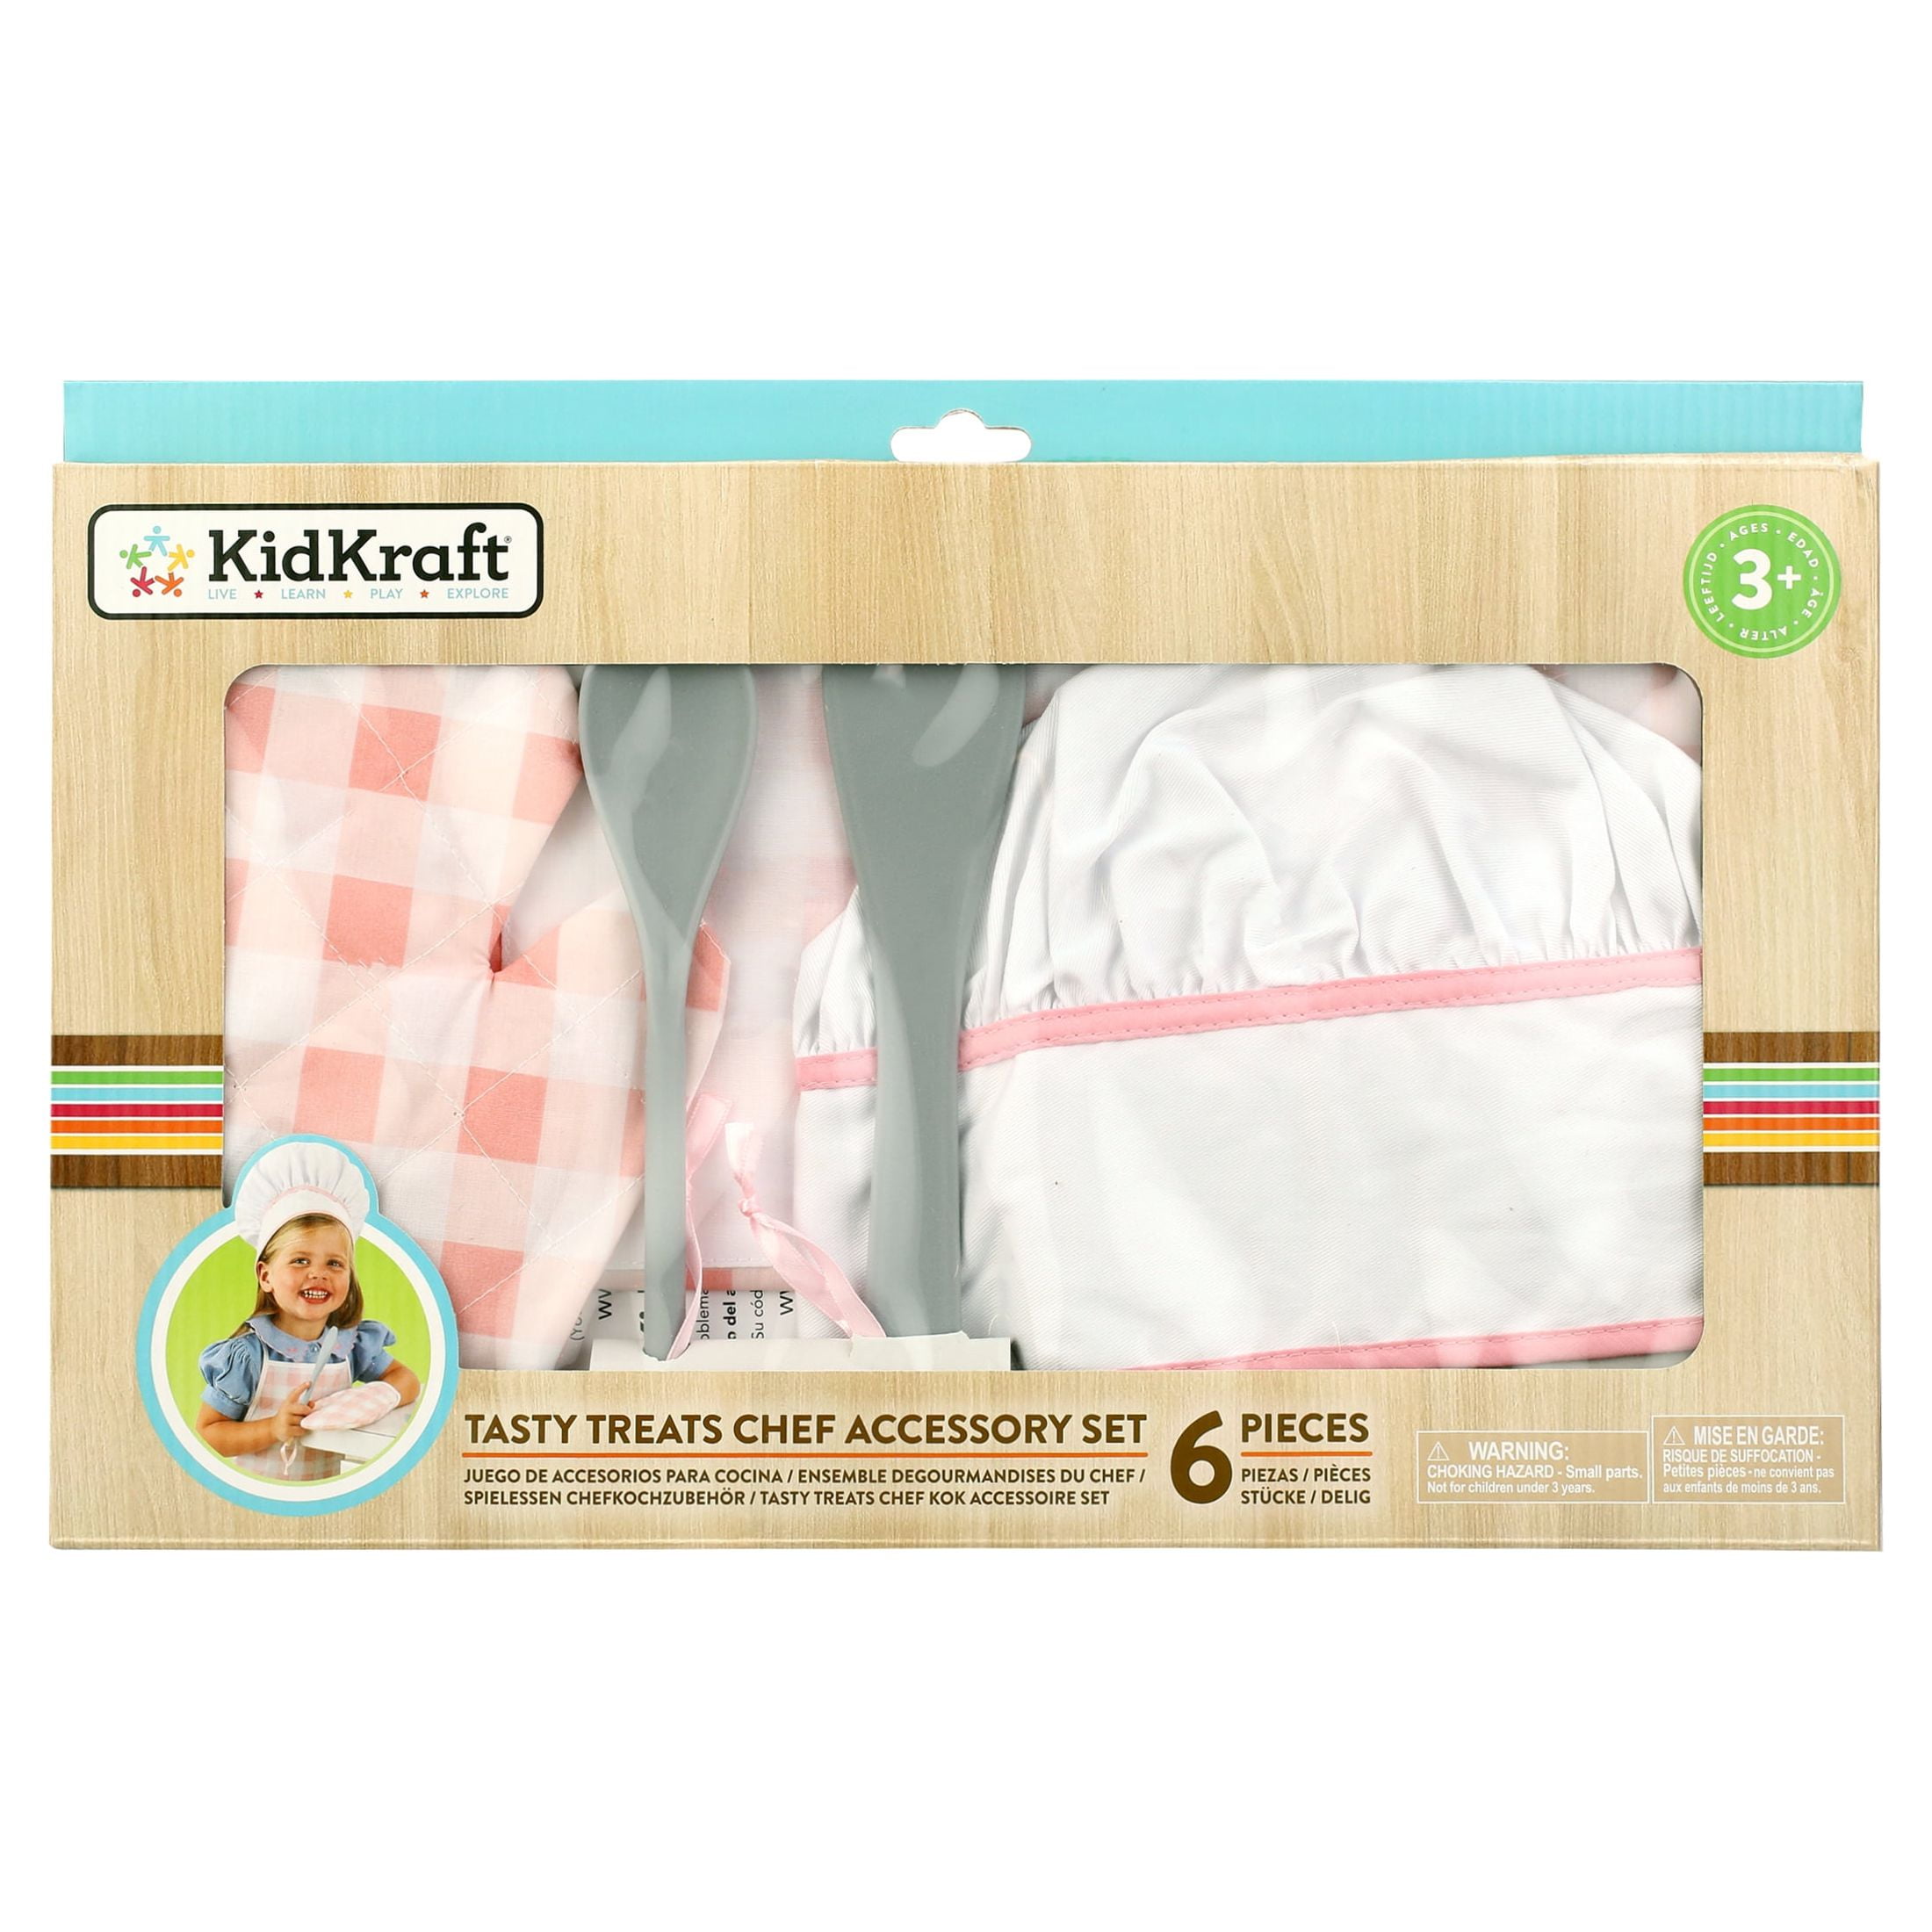 6-Piece KidKraft Kids' Tasty Treats Chef Accessory Set (Pink) $6 + Free S&H w/ Walmart+ or $35+